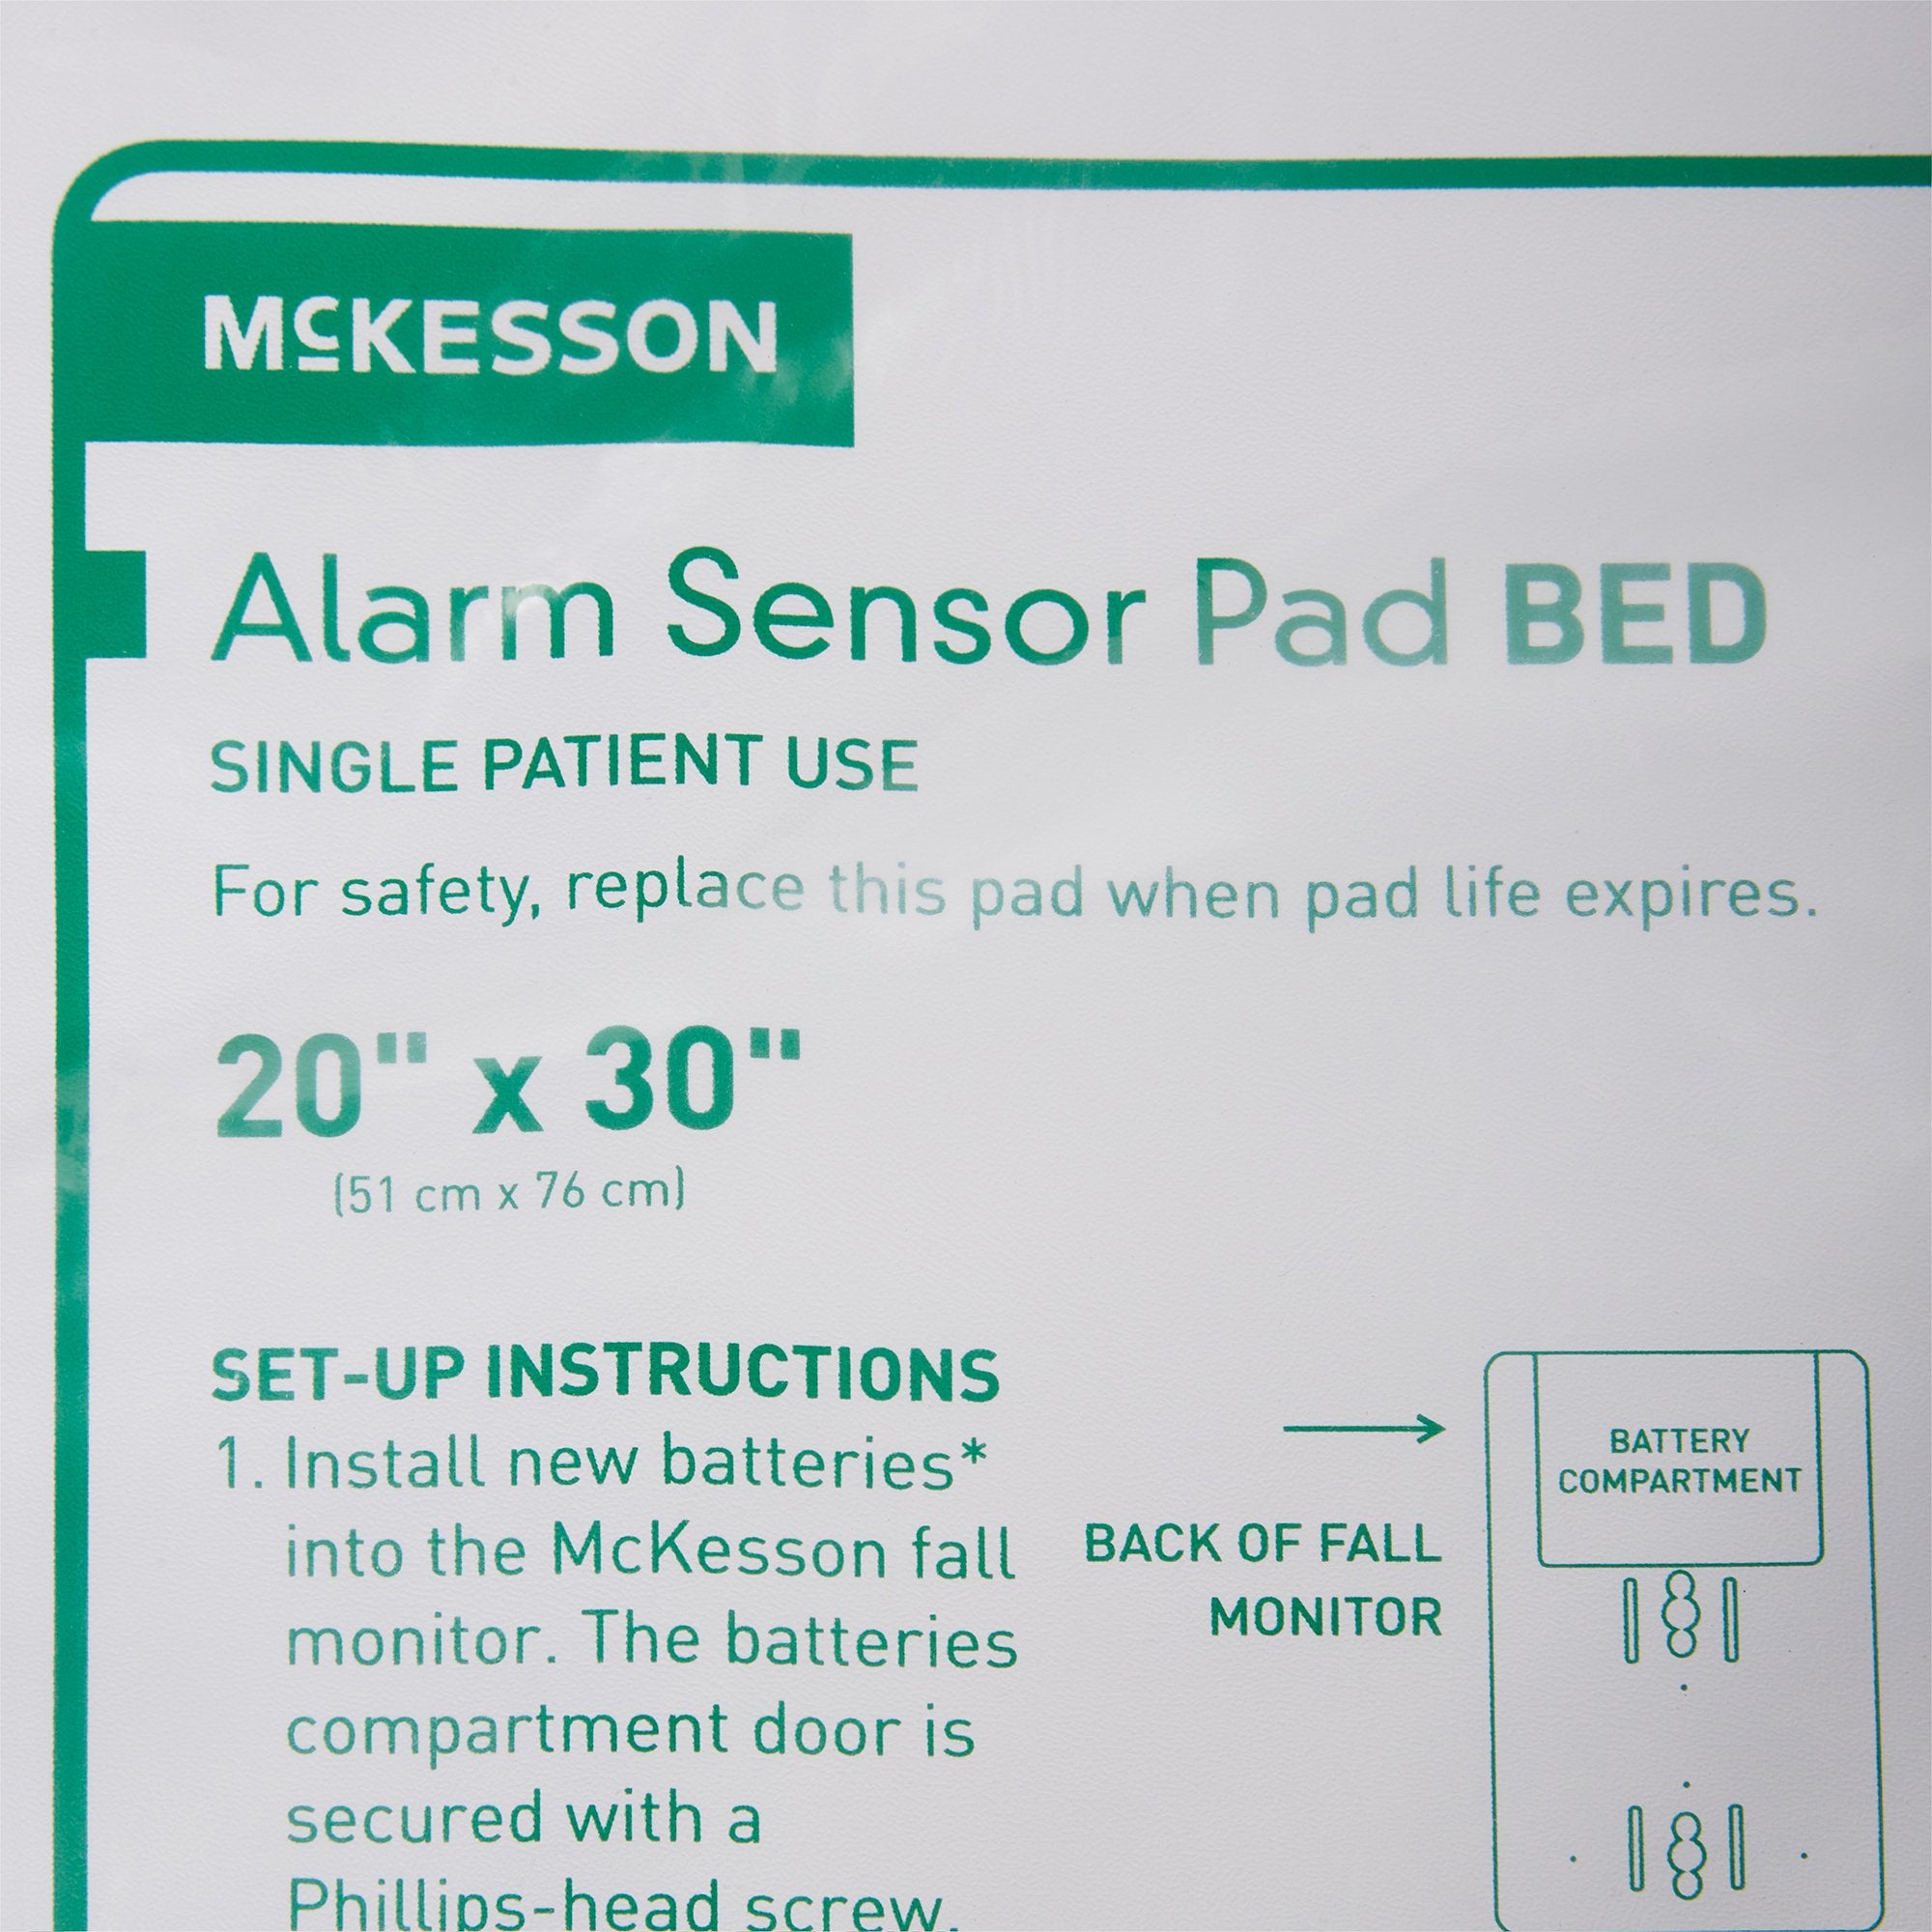 Alarm Sensor Pad McKesson Brand 20 X 30 Inch (51 cm x 76 cm)